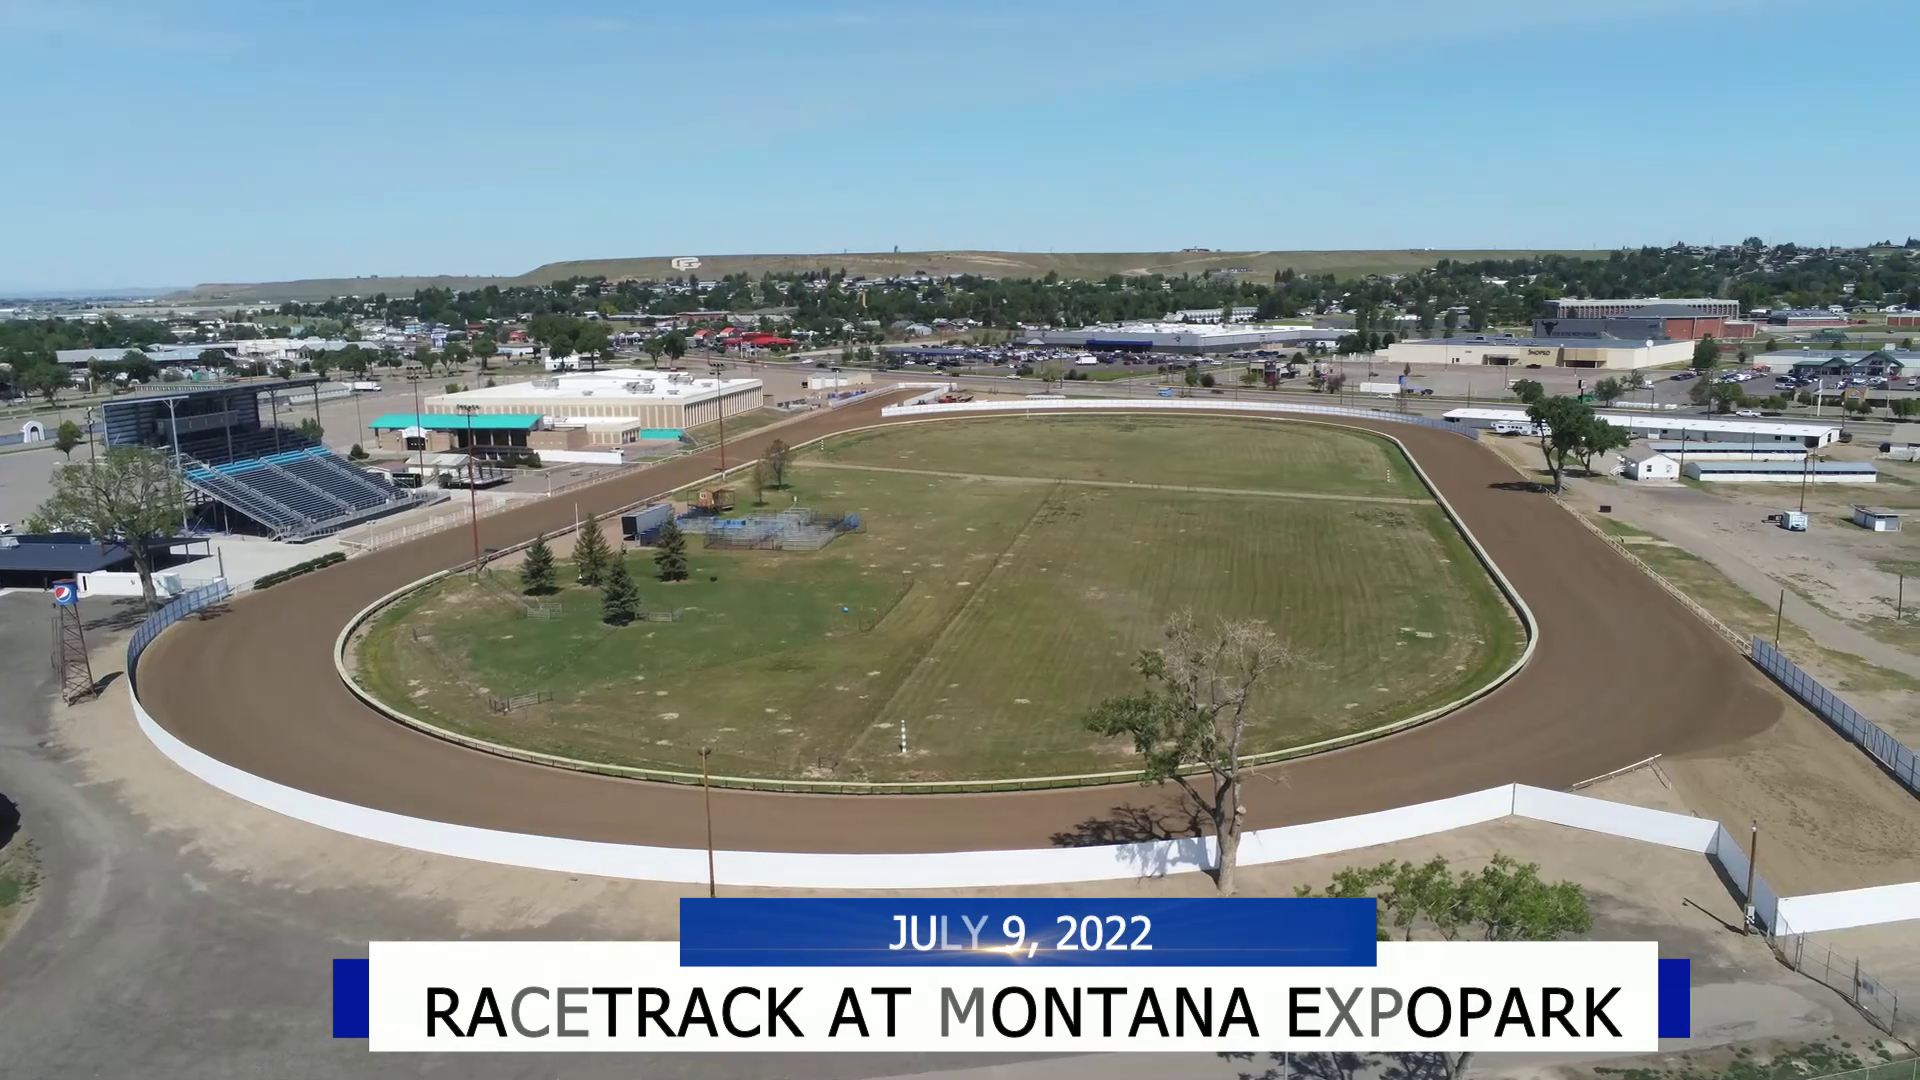 Racetrack at Montana ExpoPark